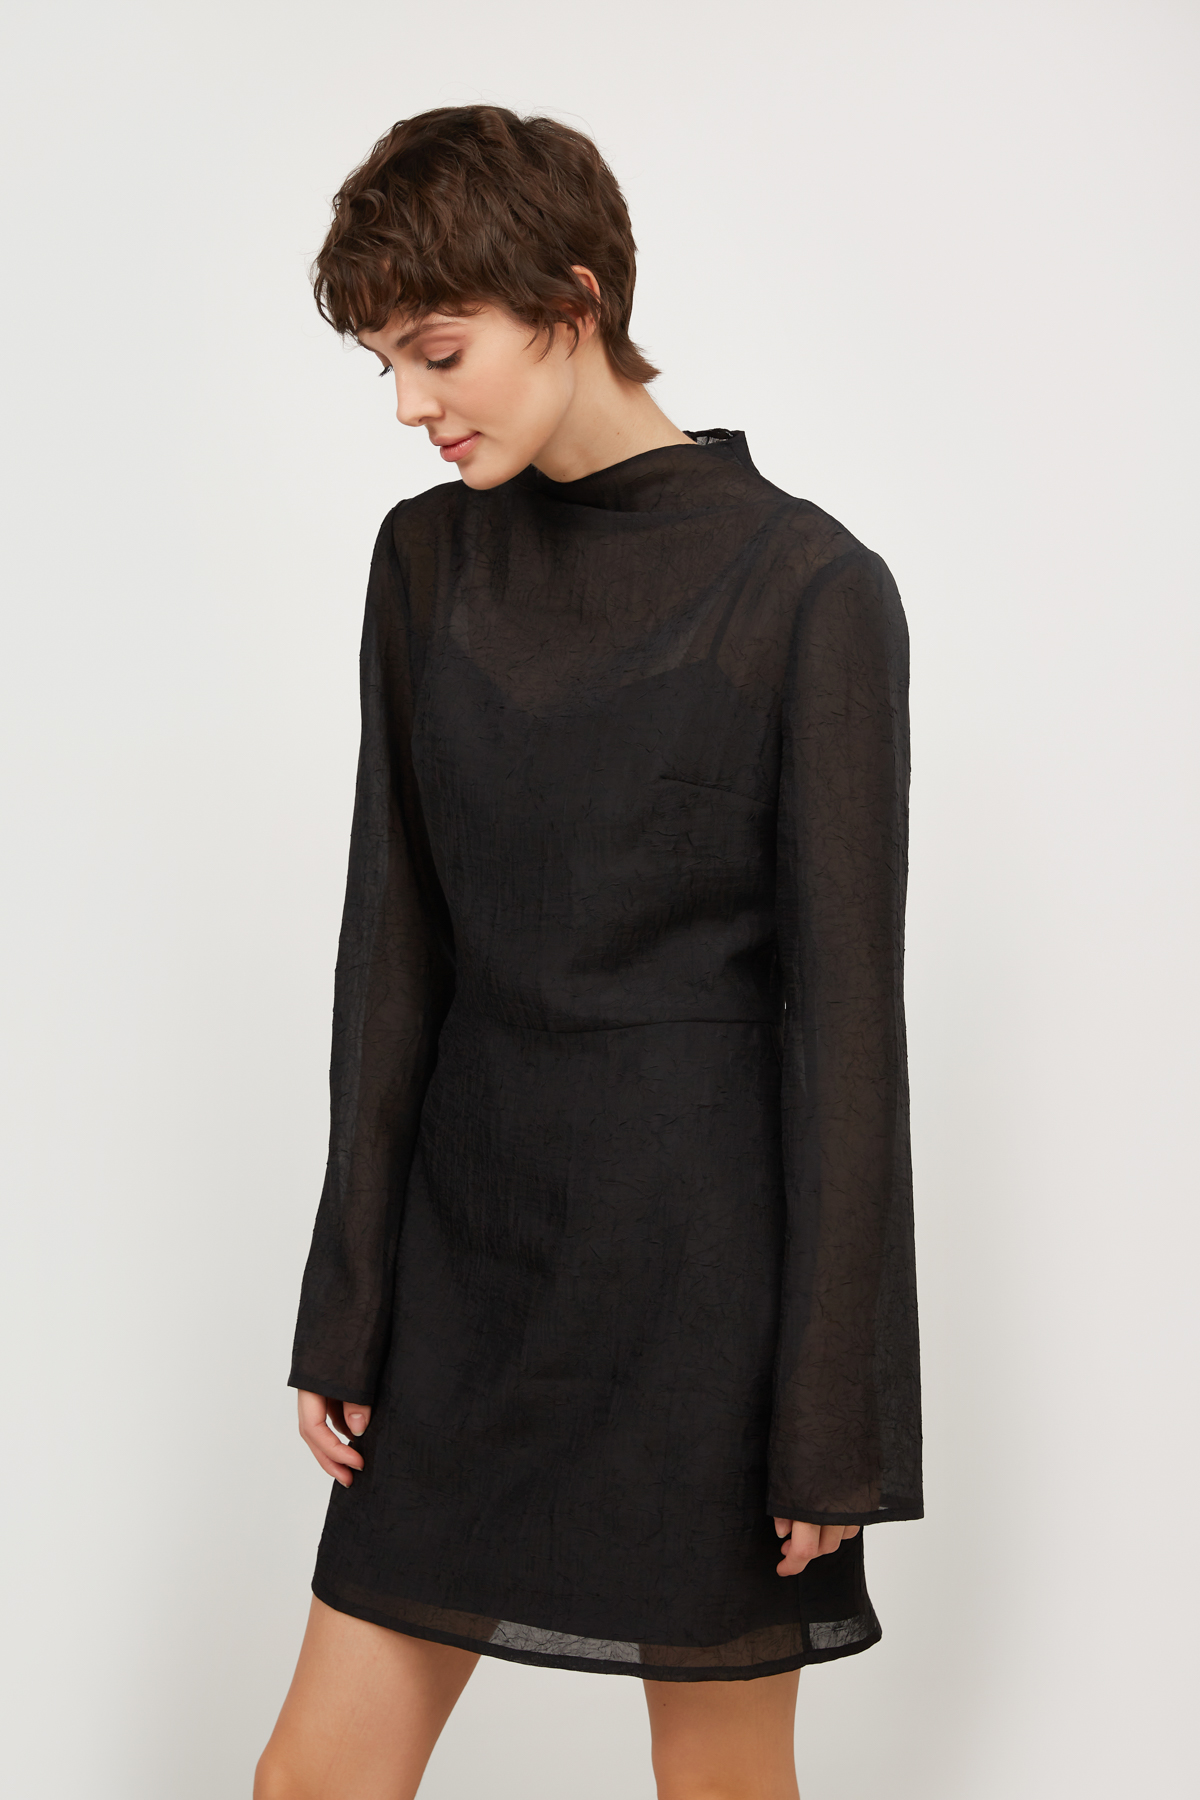 Short black dress with crinkled chiffon, photo 1